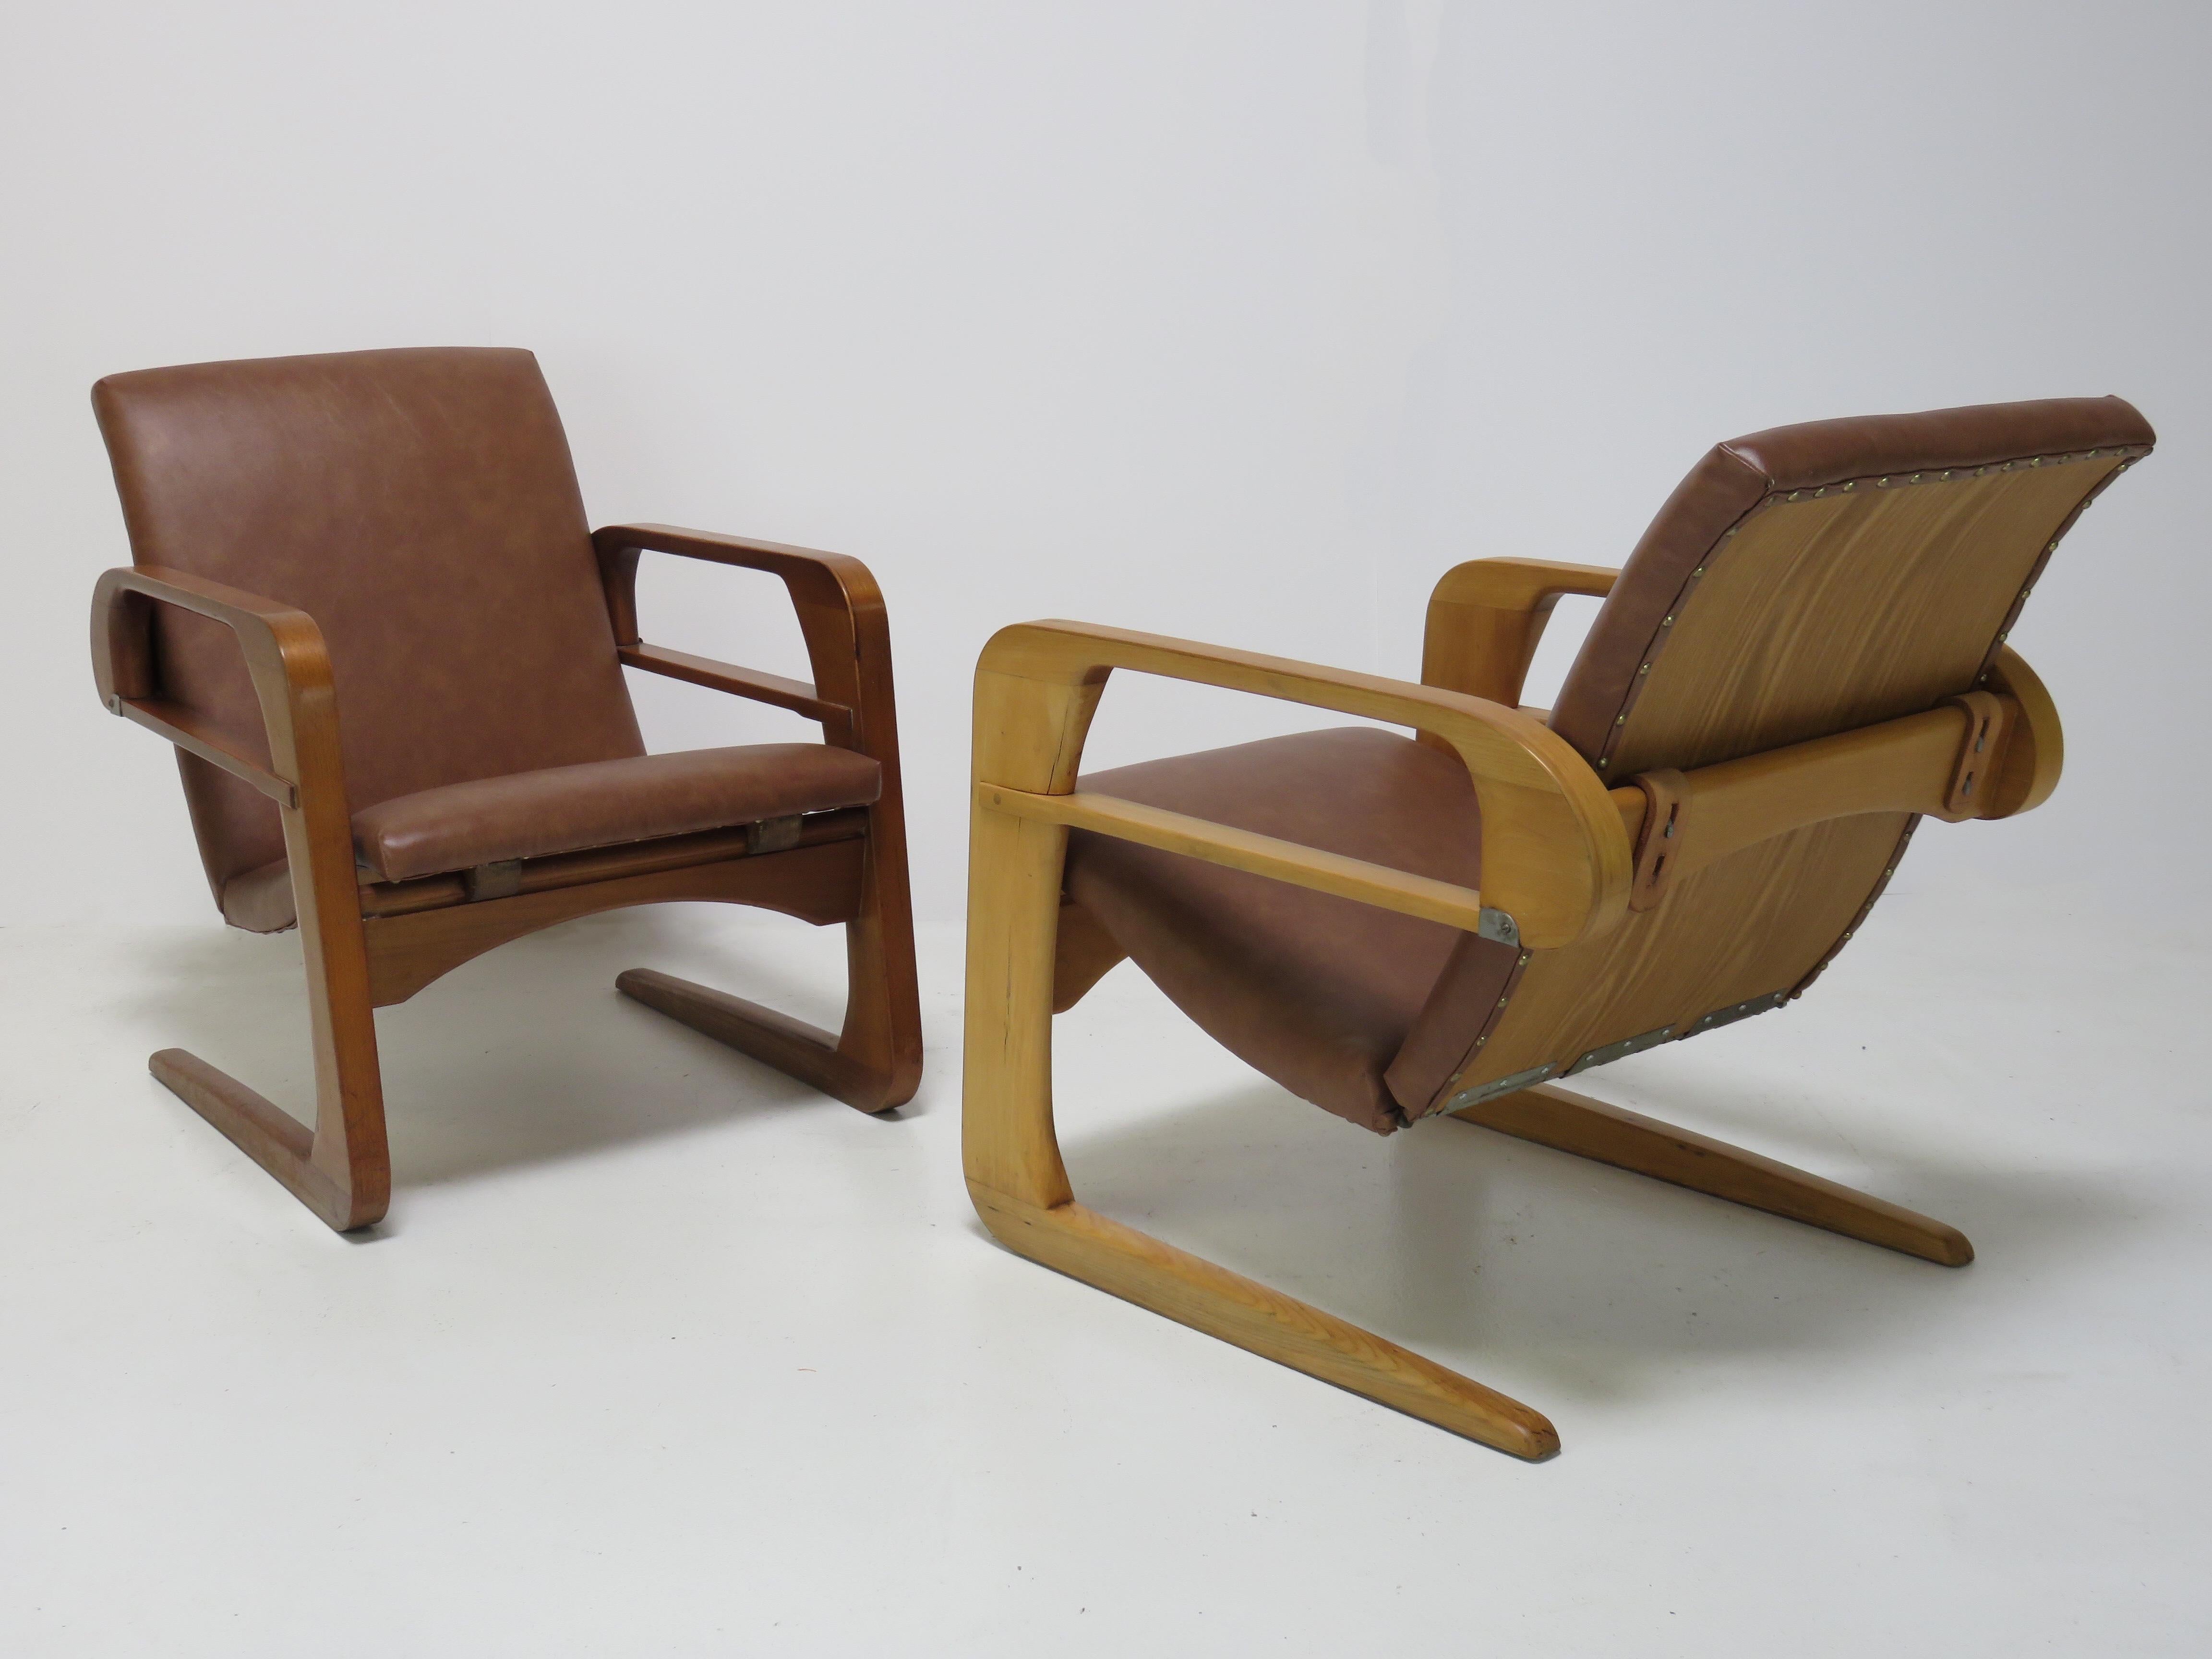 Streamlined Moderne KEM Weber Airline Chairs For Sale